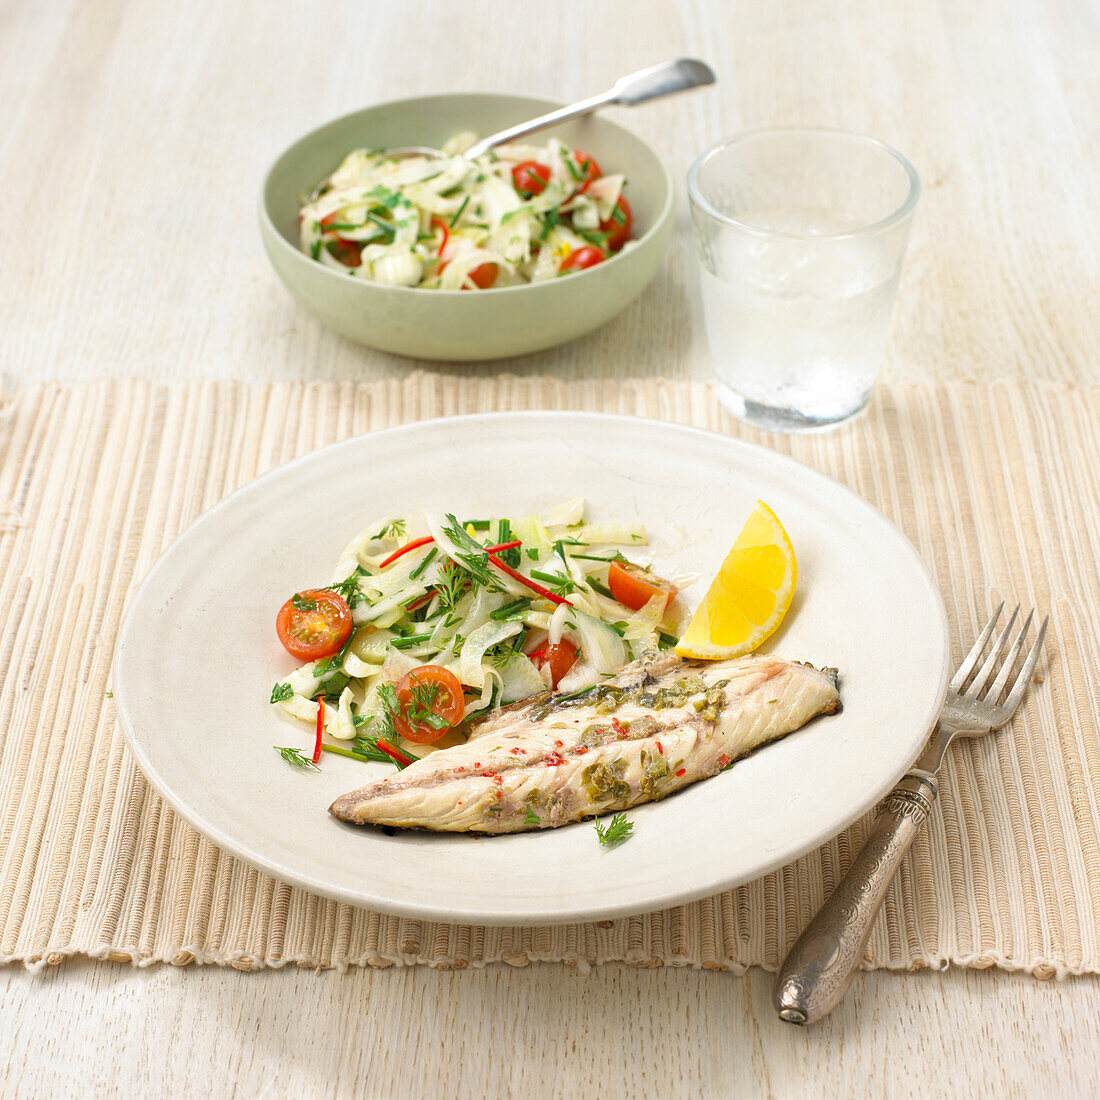 BBQ mackerel and salad